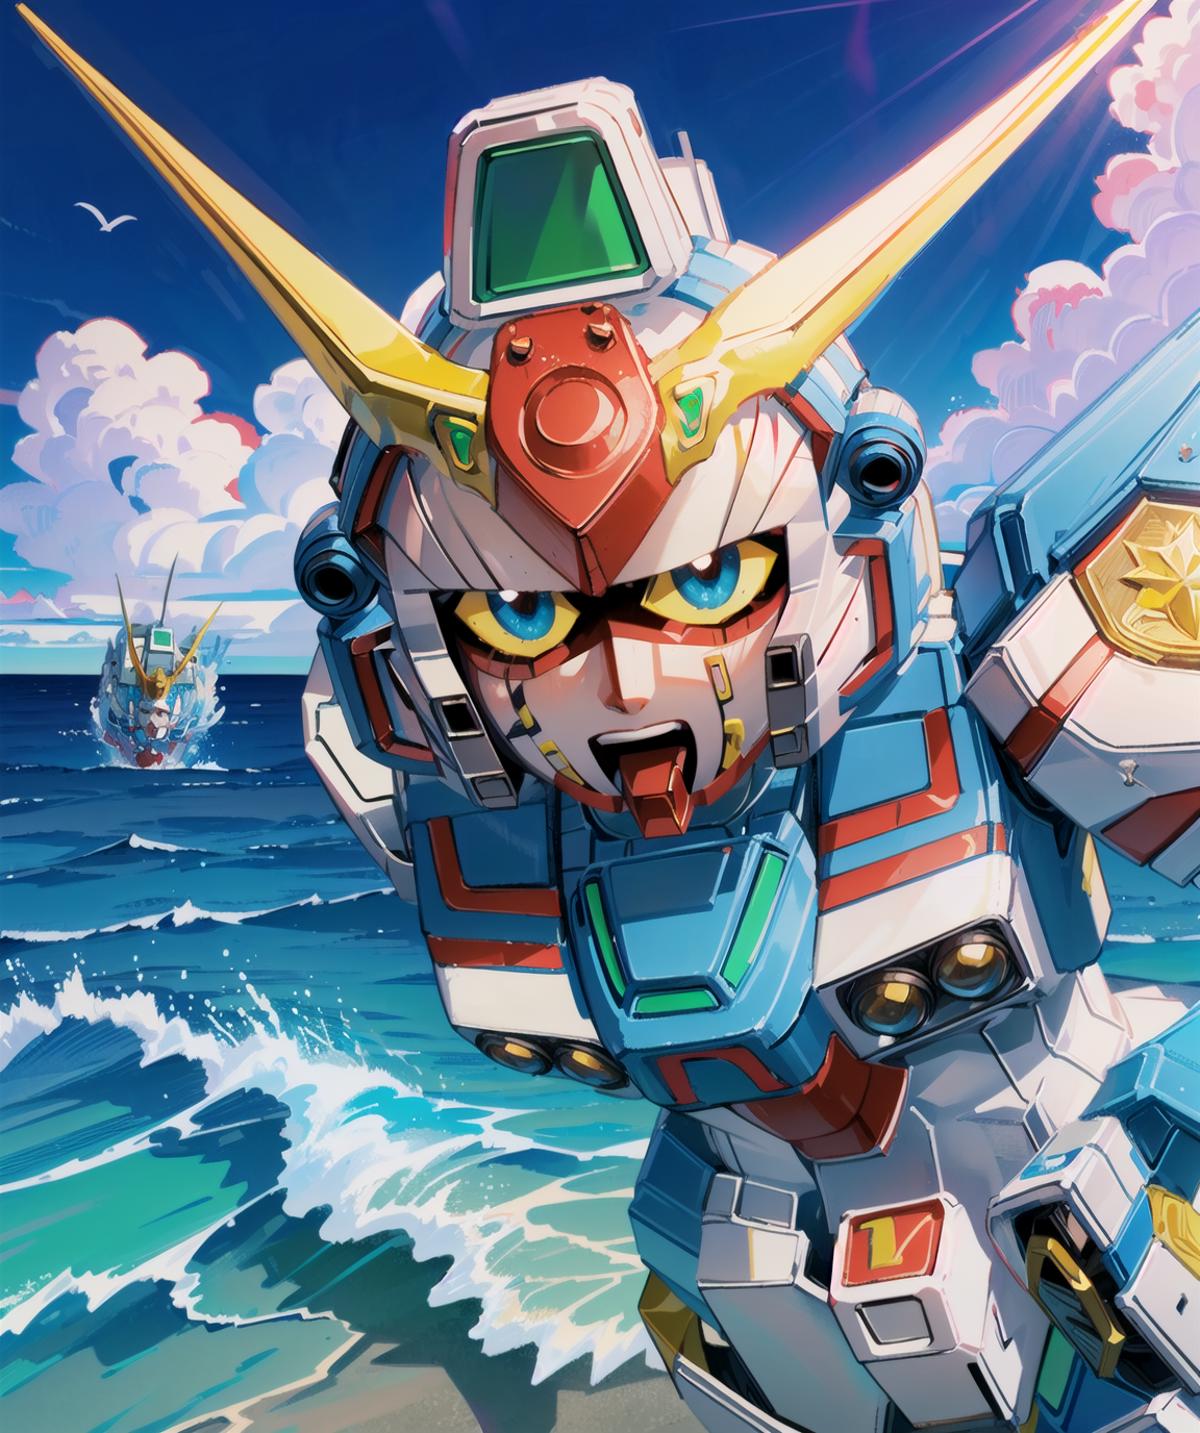 Hyper Captain Gundam(SD Gundam Force) image by Ashimori